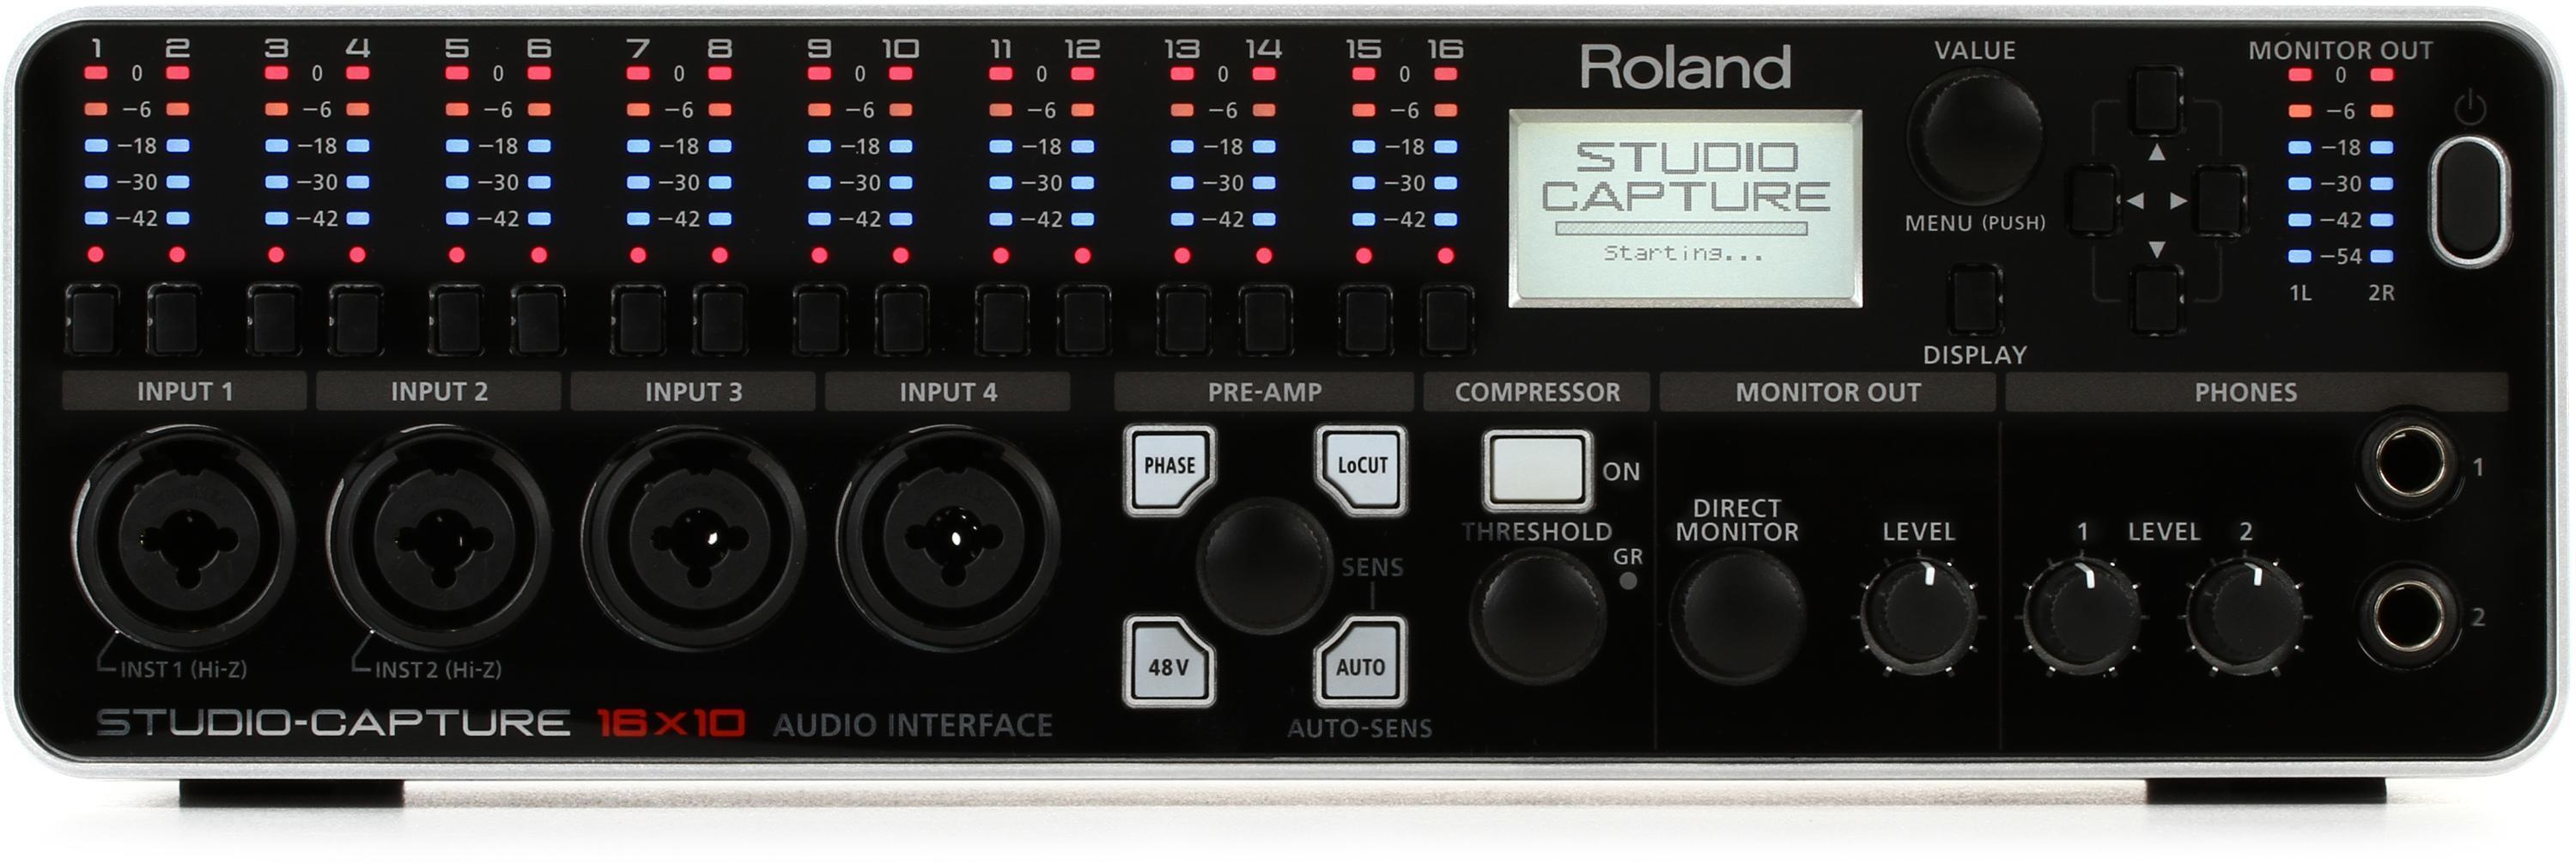 Roland Studio-Capture UA-1610 USB Audio Interface | Sweetwater